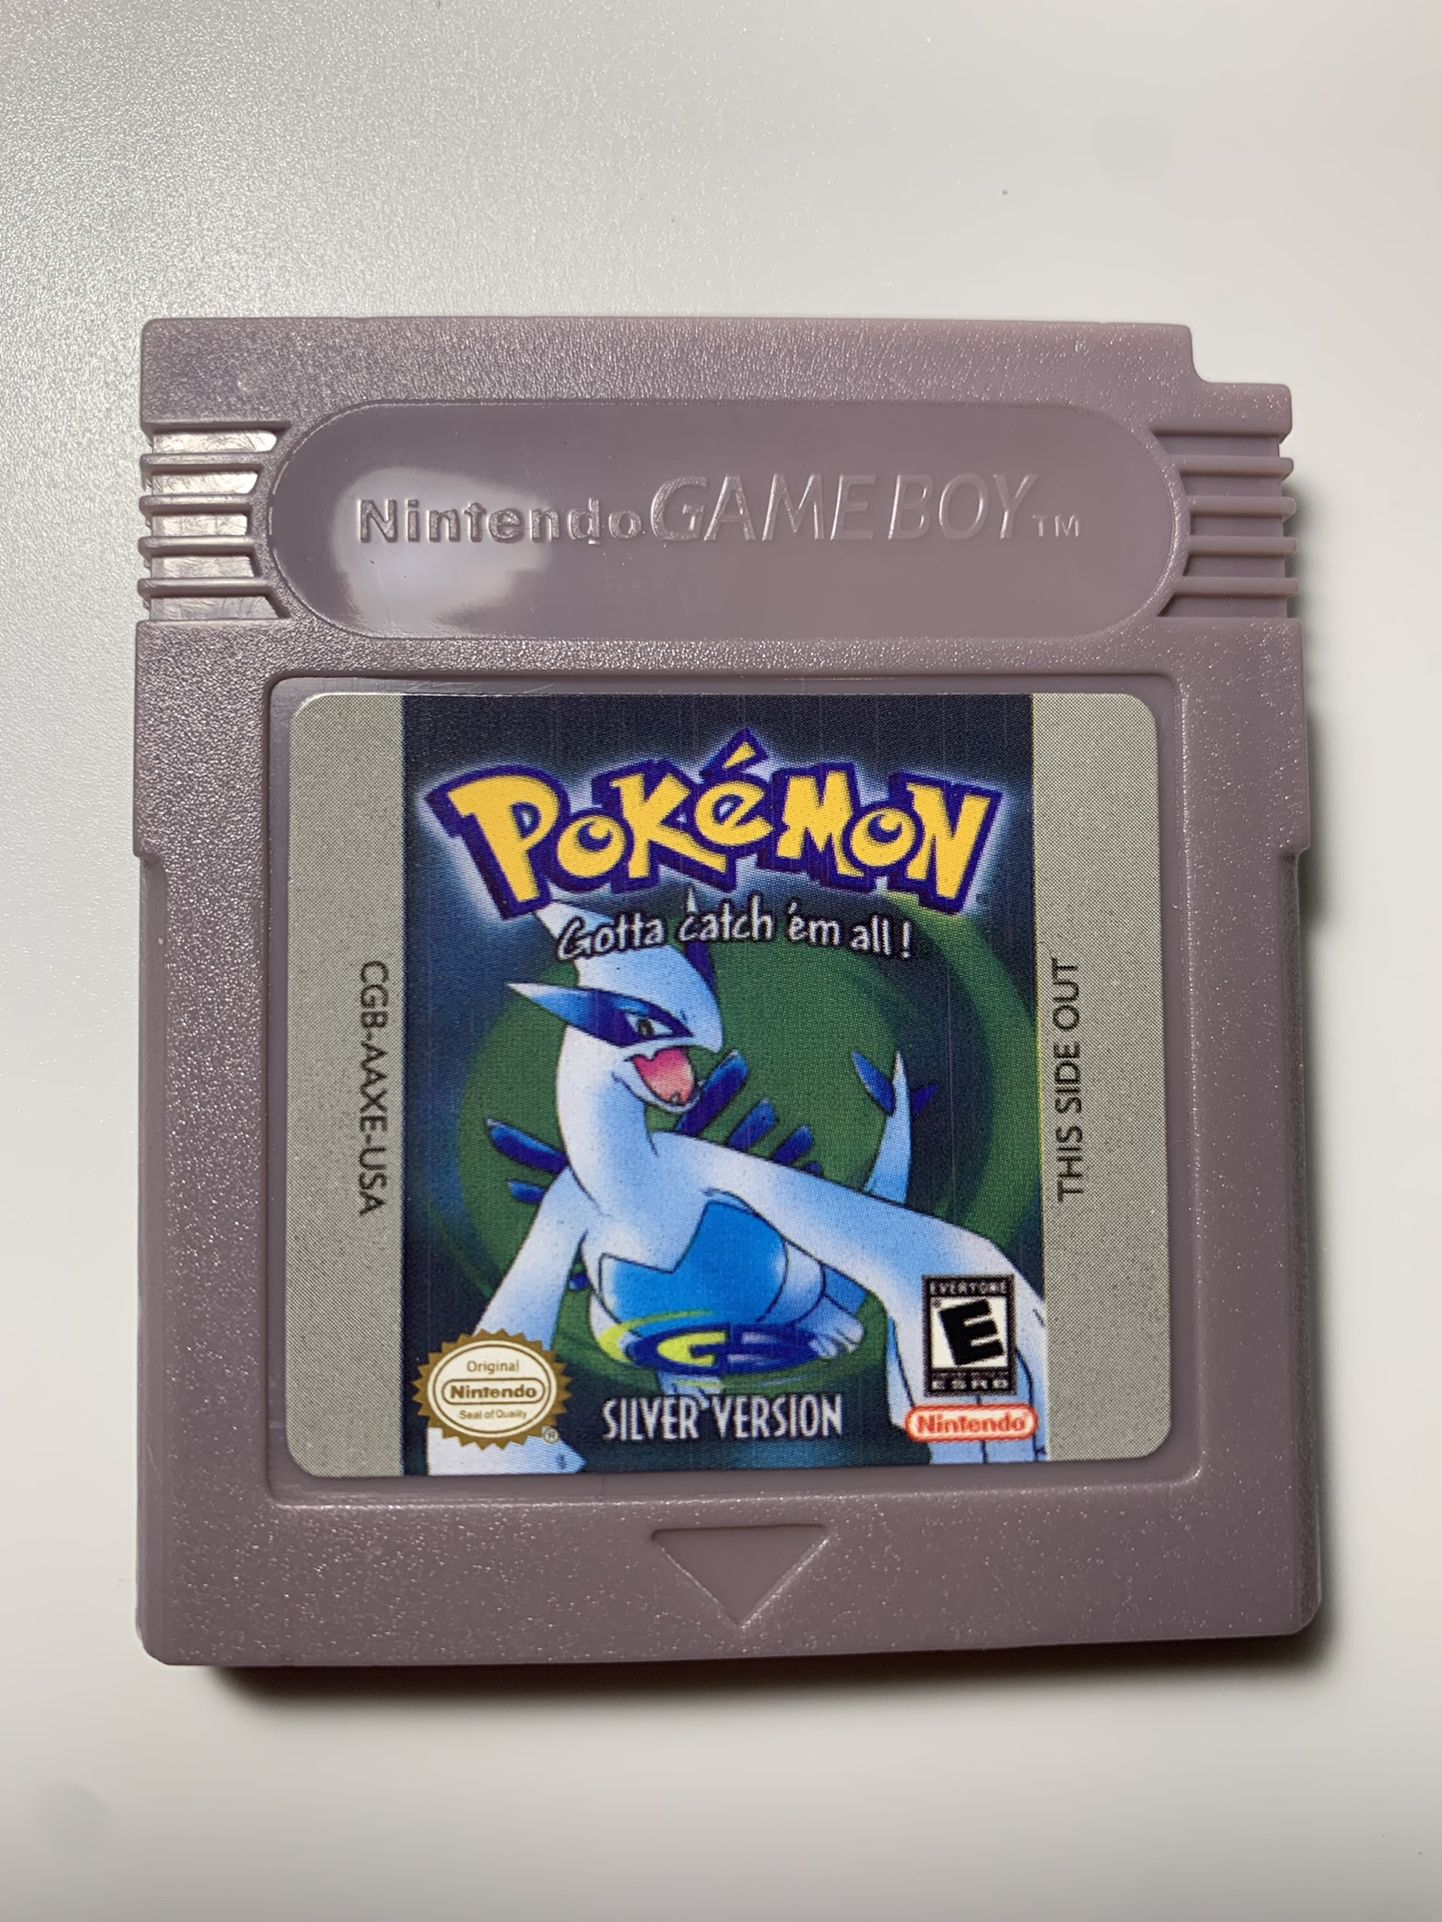 Pokémon Gameboy Silver Version